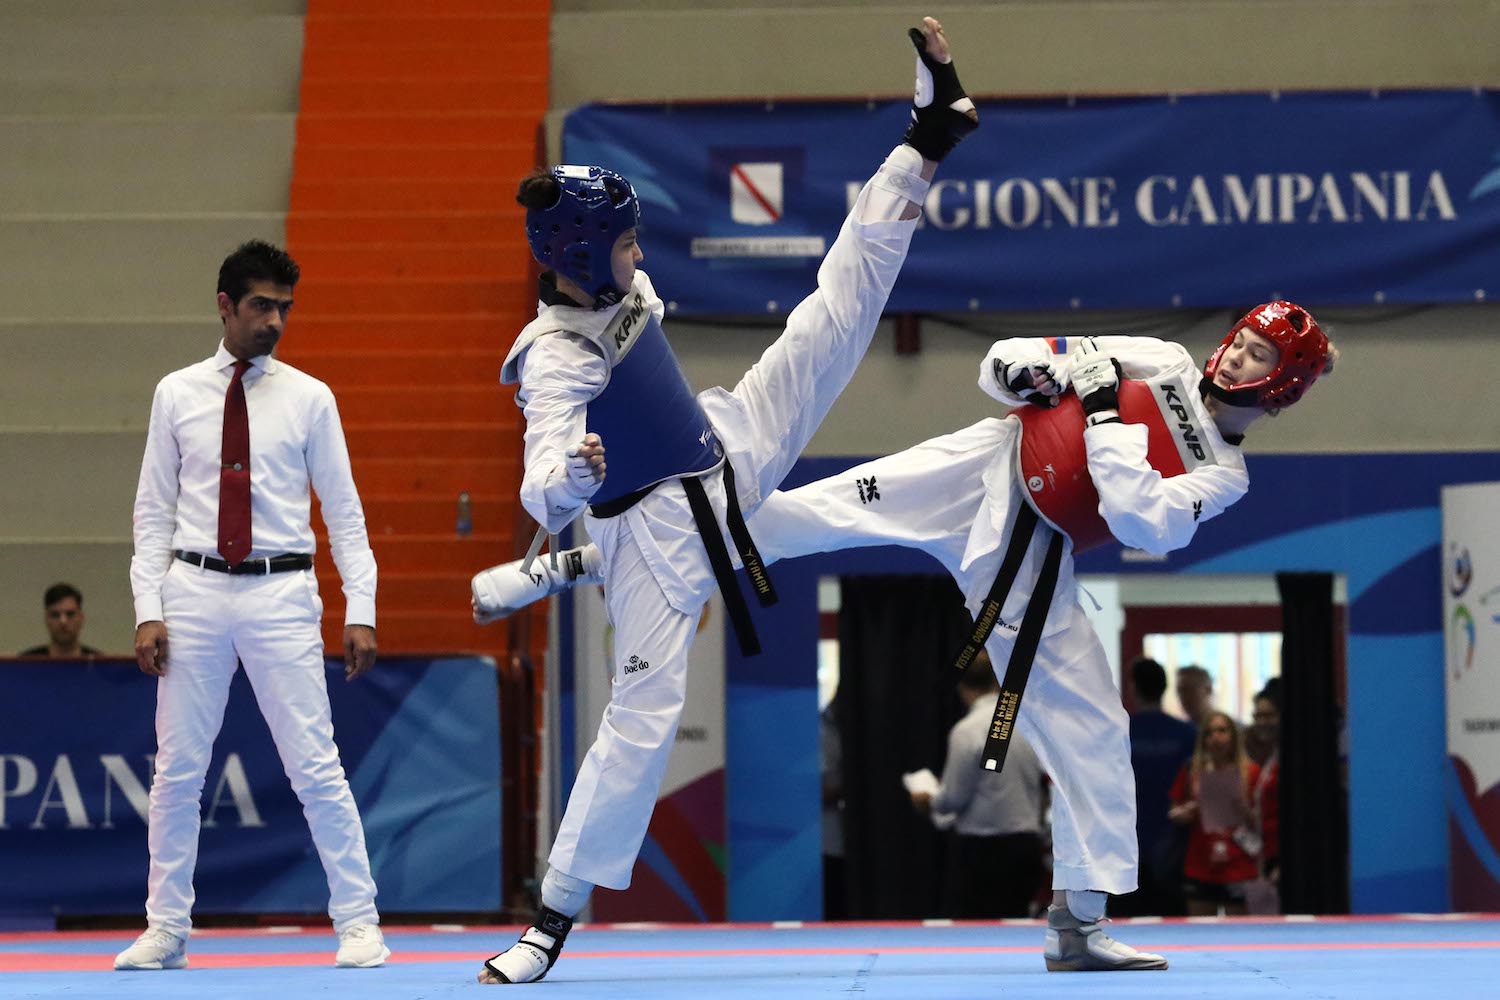 Finali di Taekwondo Yaman Irem TUR (B) v Turutina Iuliia RUS (R), Pala Casoria, Napoli 11 Luglio 2019 PHOTO POOL FOTOGRAFI UNIVERSIADE 2019